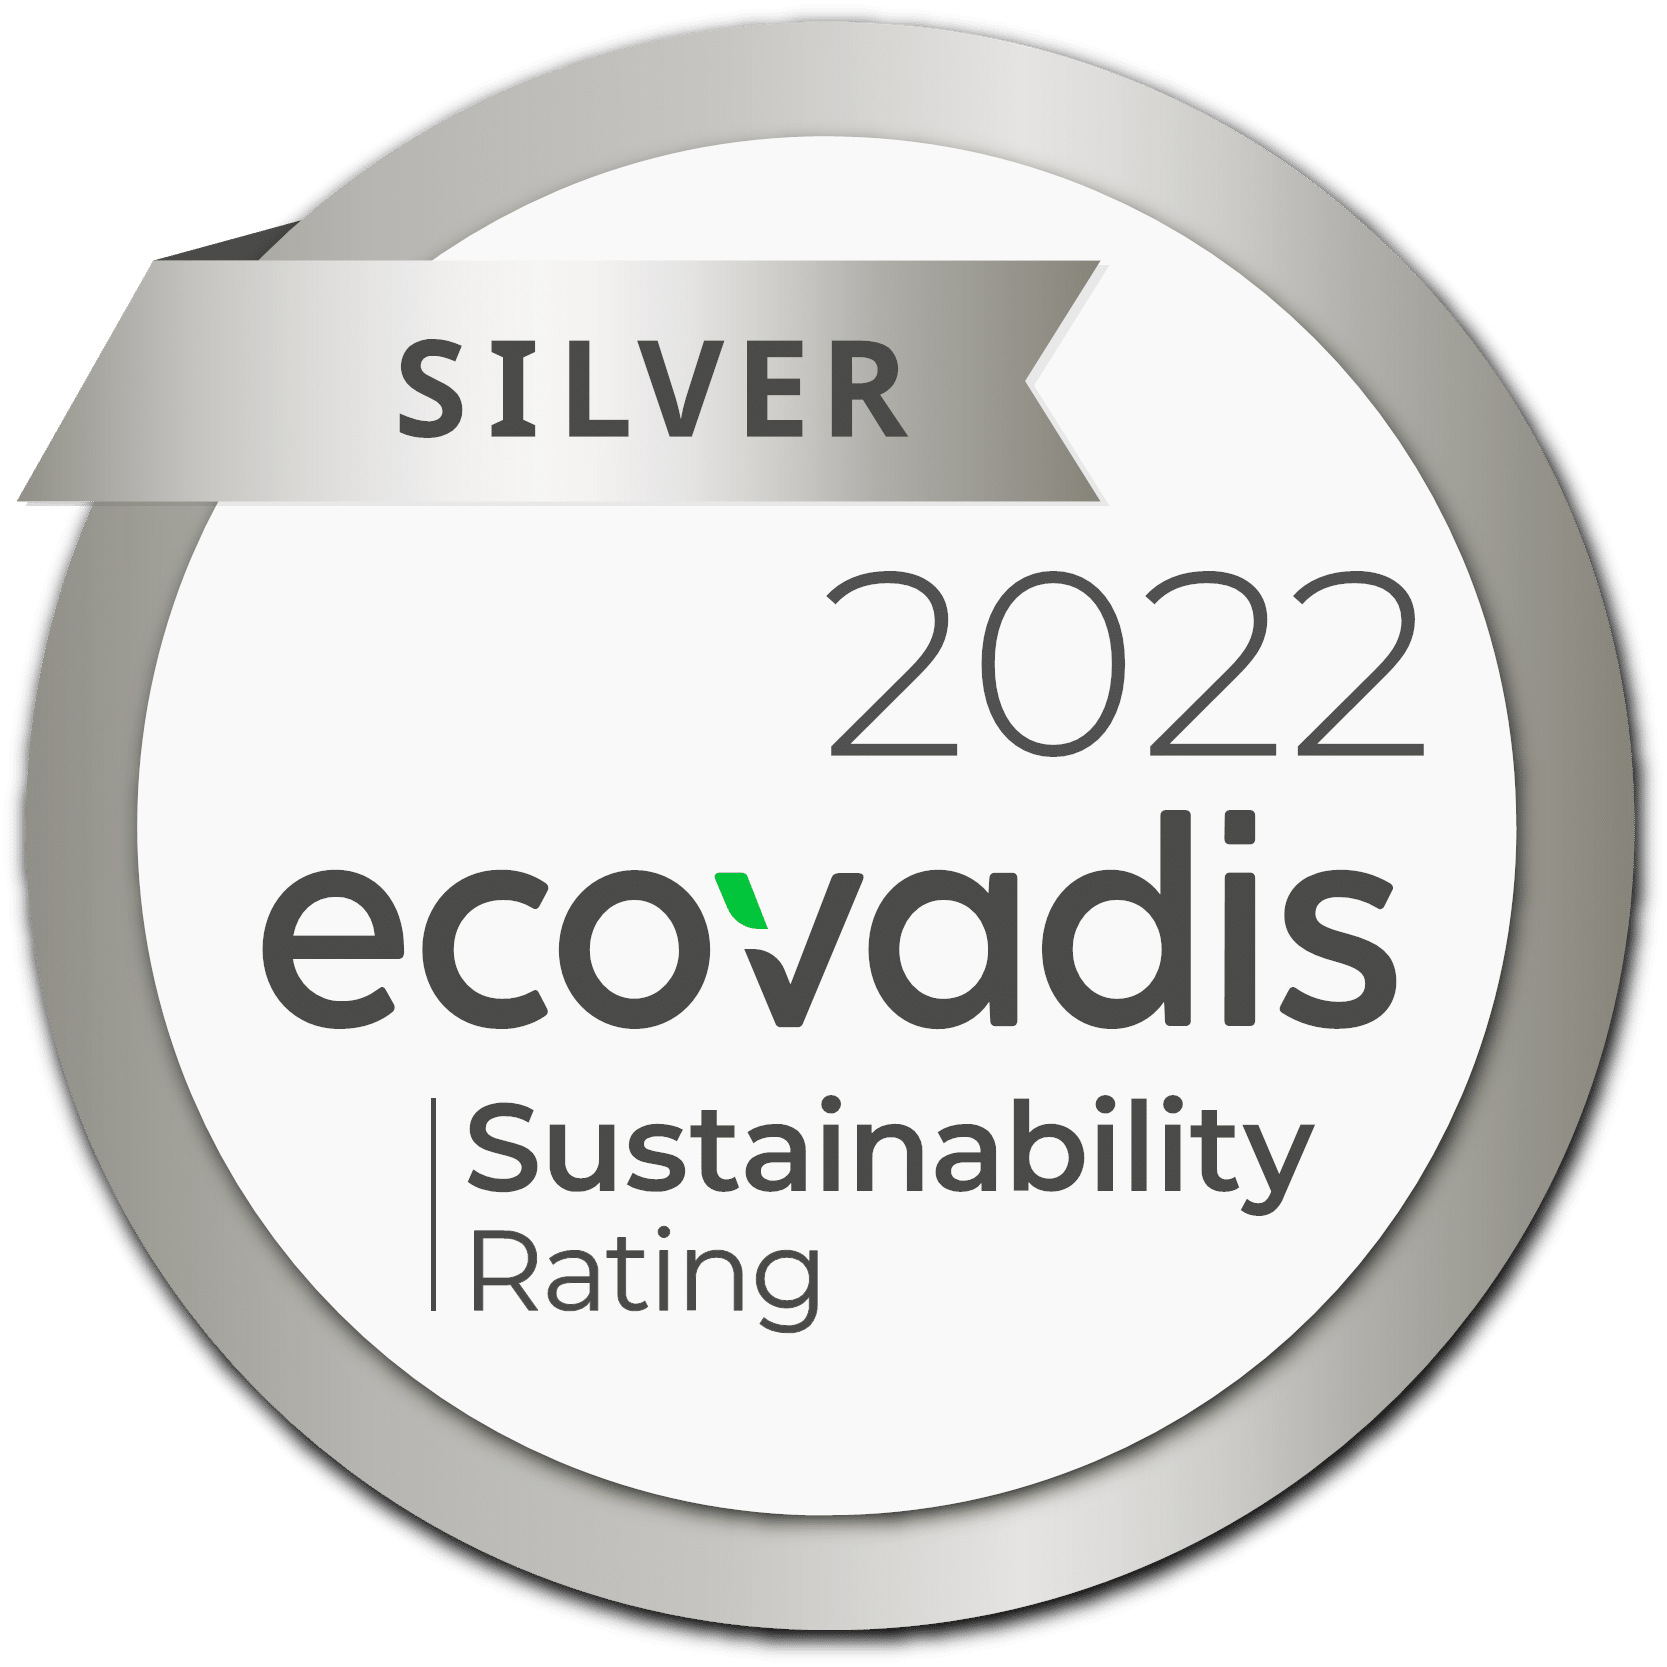 Silver ecovadis 2022